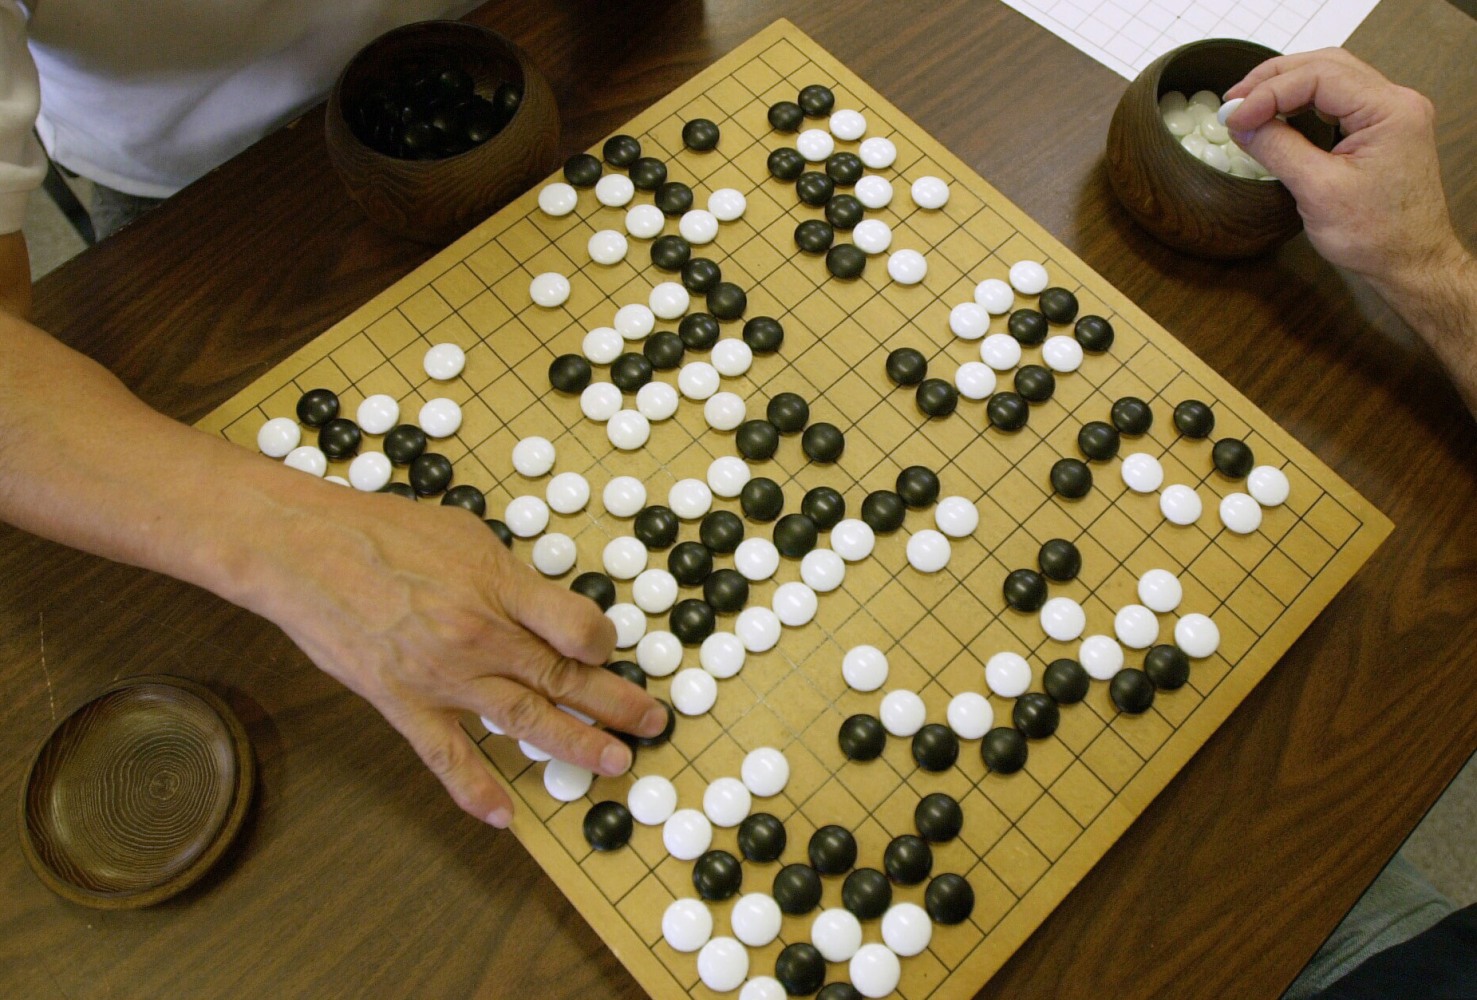 Google's AI Wins First Match Against Korean Board-Game Champion